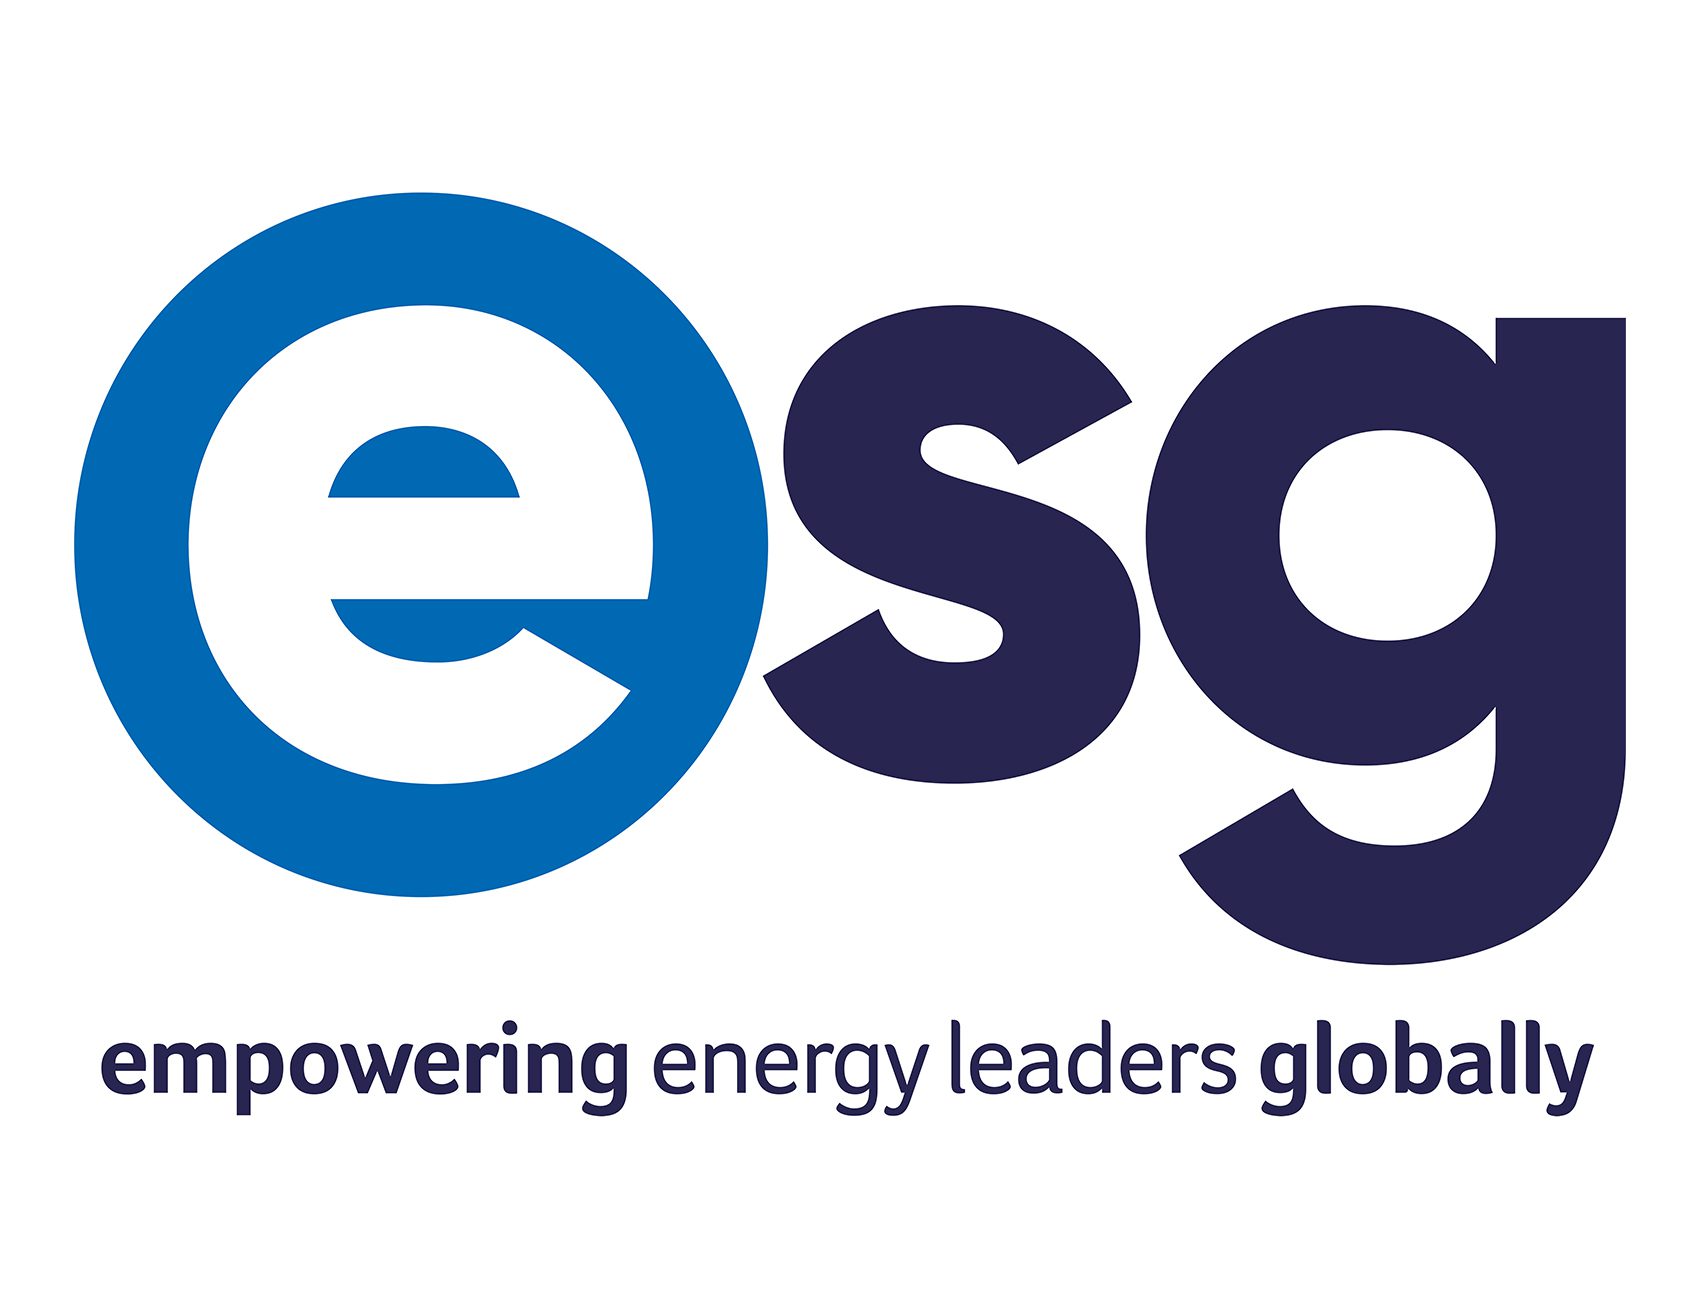 Launching the new global ESG brand